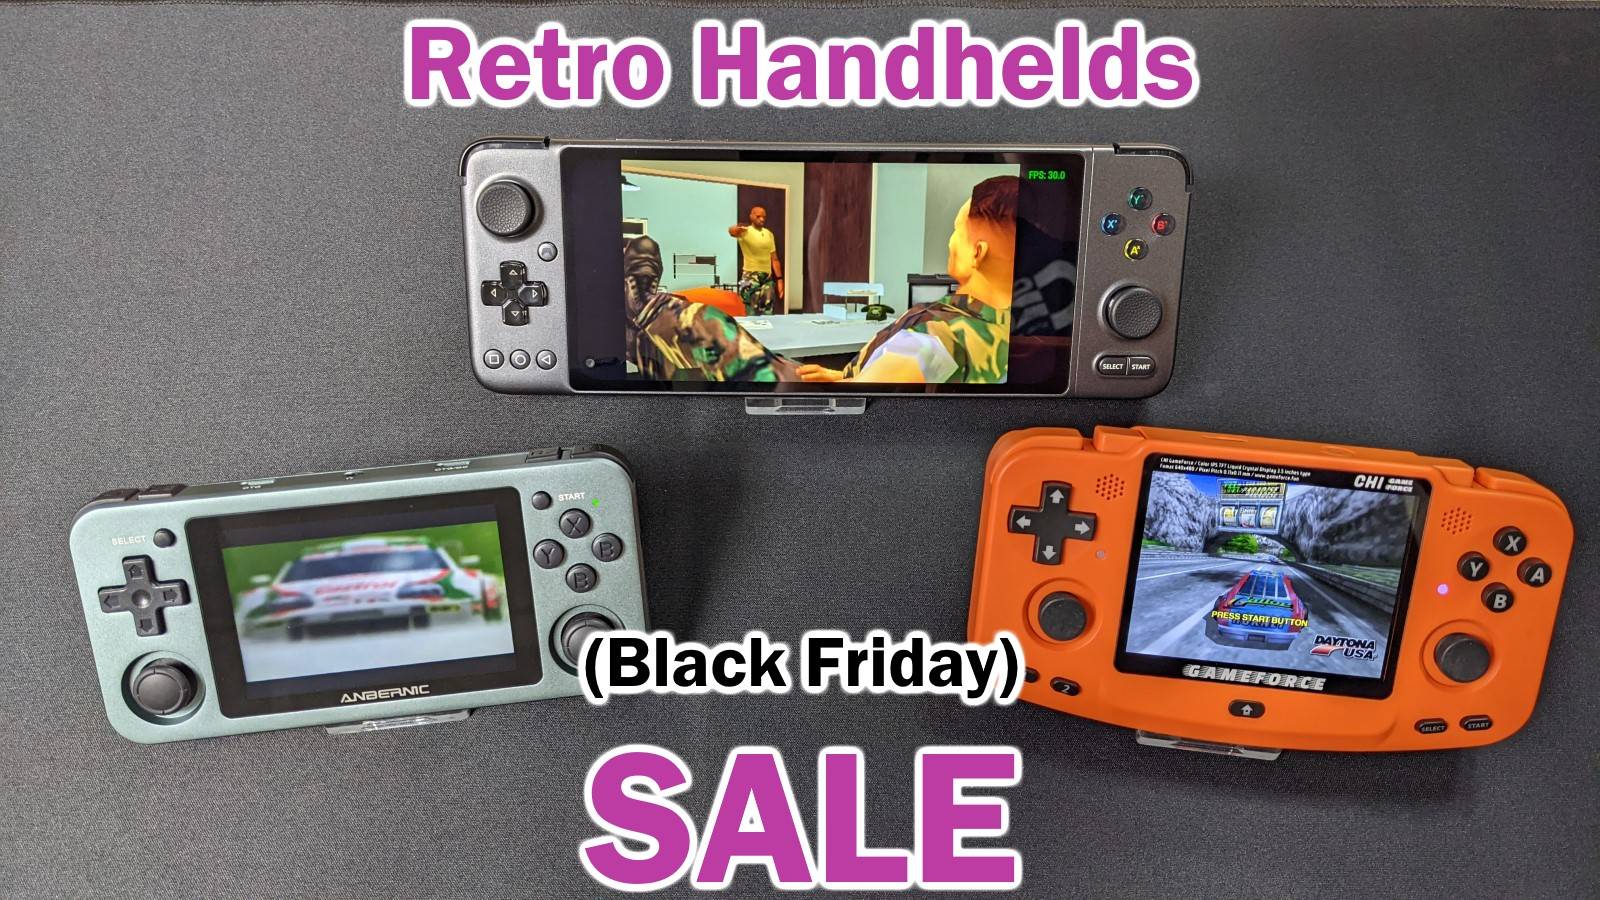 Retro Handheld Black Friday Sale Banner